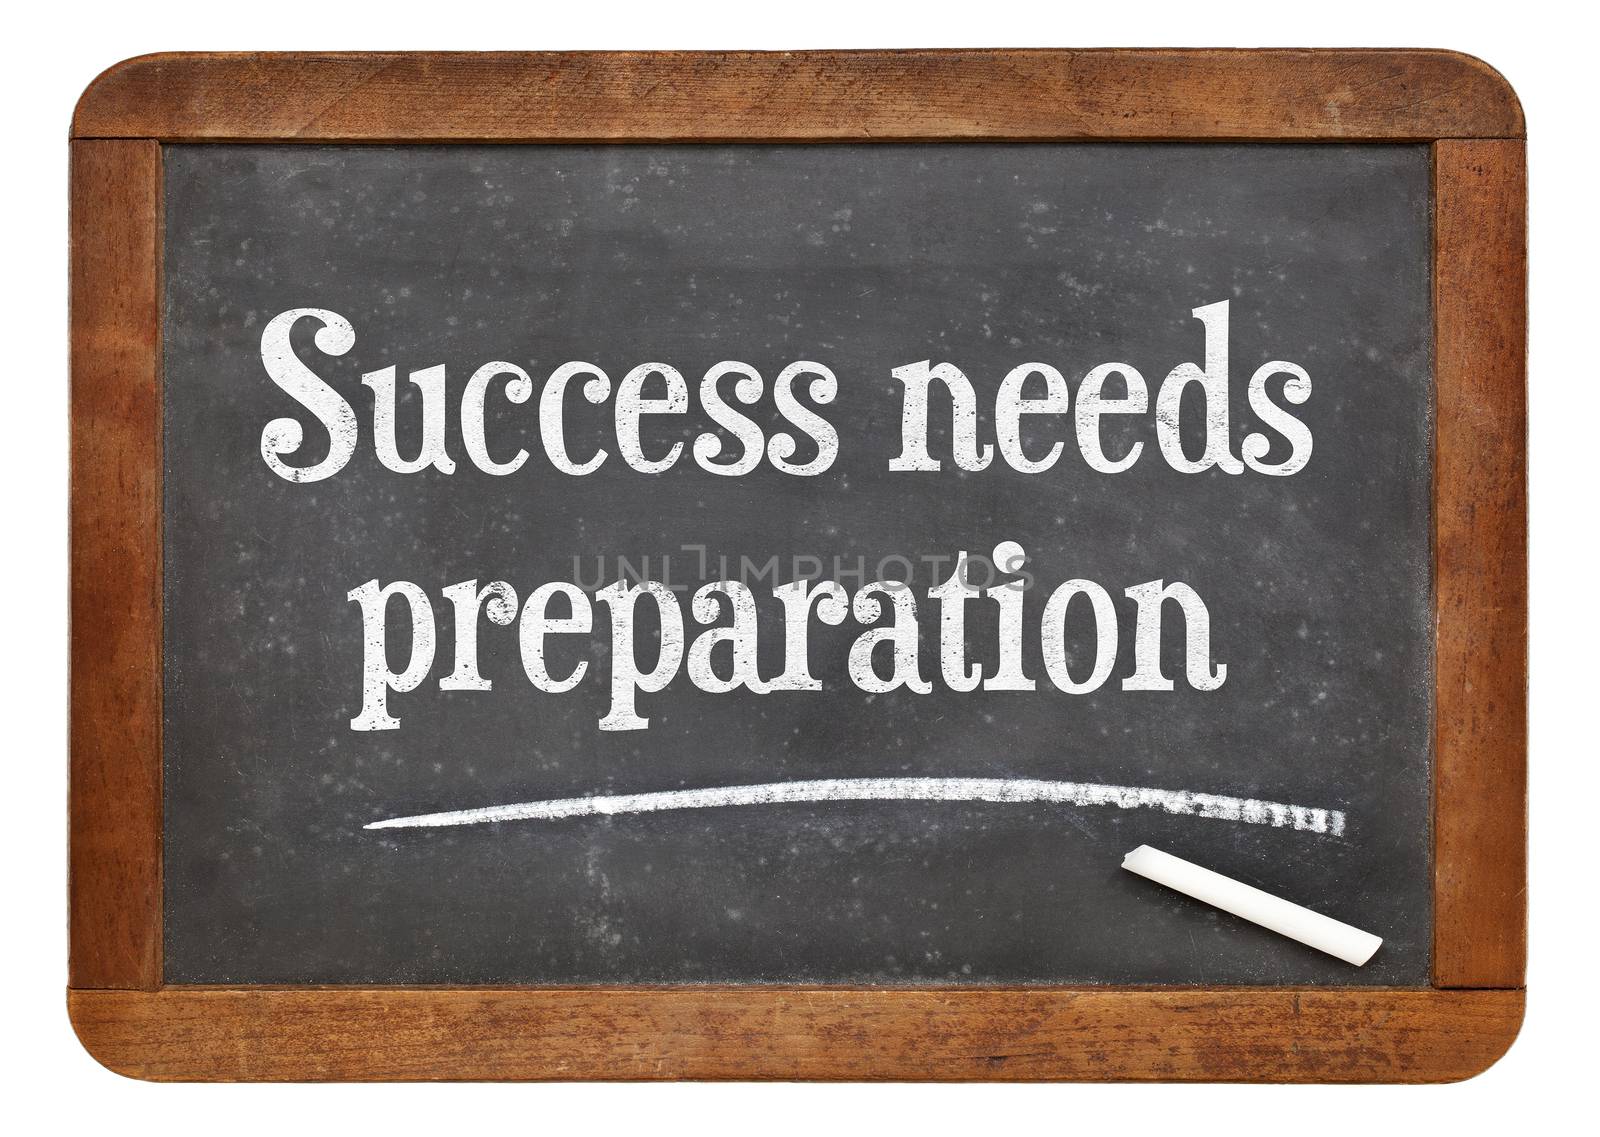 Success needs preparation - motivational text on a vintage slate blackboard